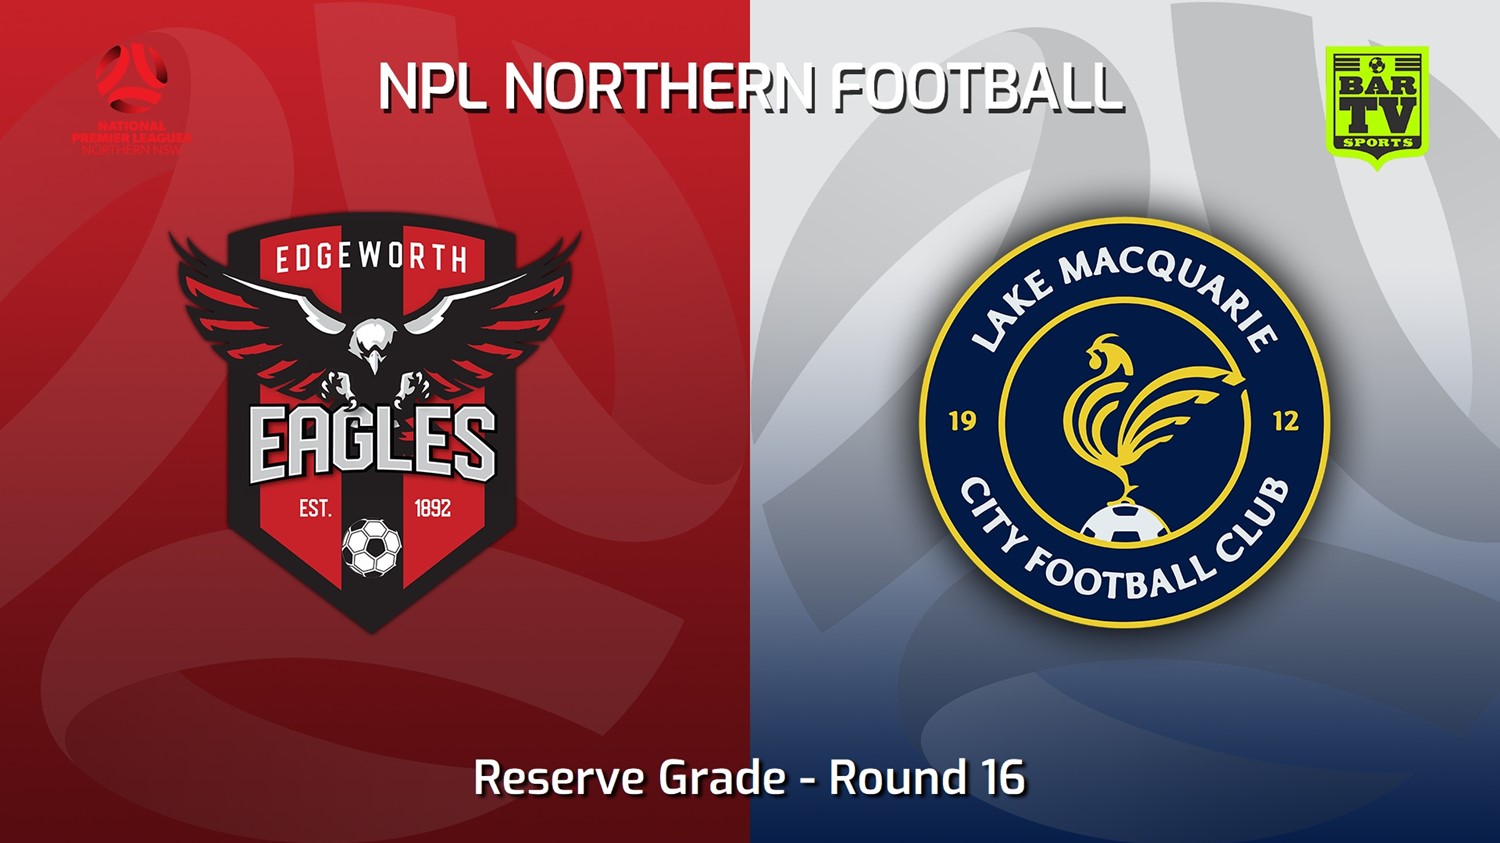 230625-NNSW NPLM Res Round 16 - Edgeworth Eagles Res v Lake Macquarie City FC Res Minigame Slate Image